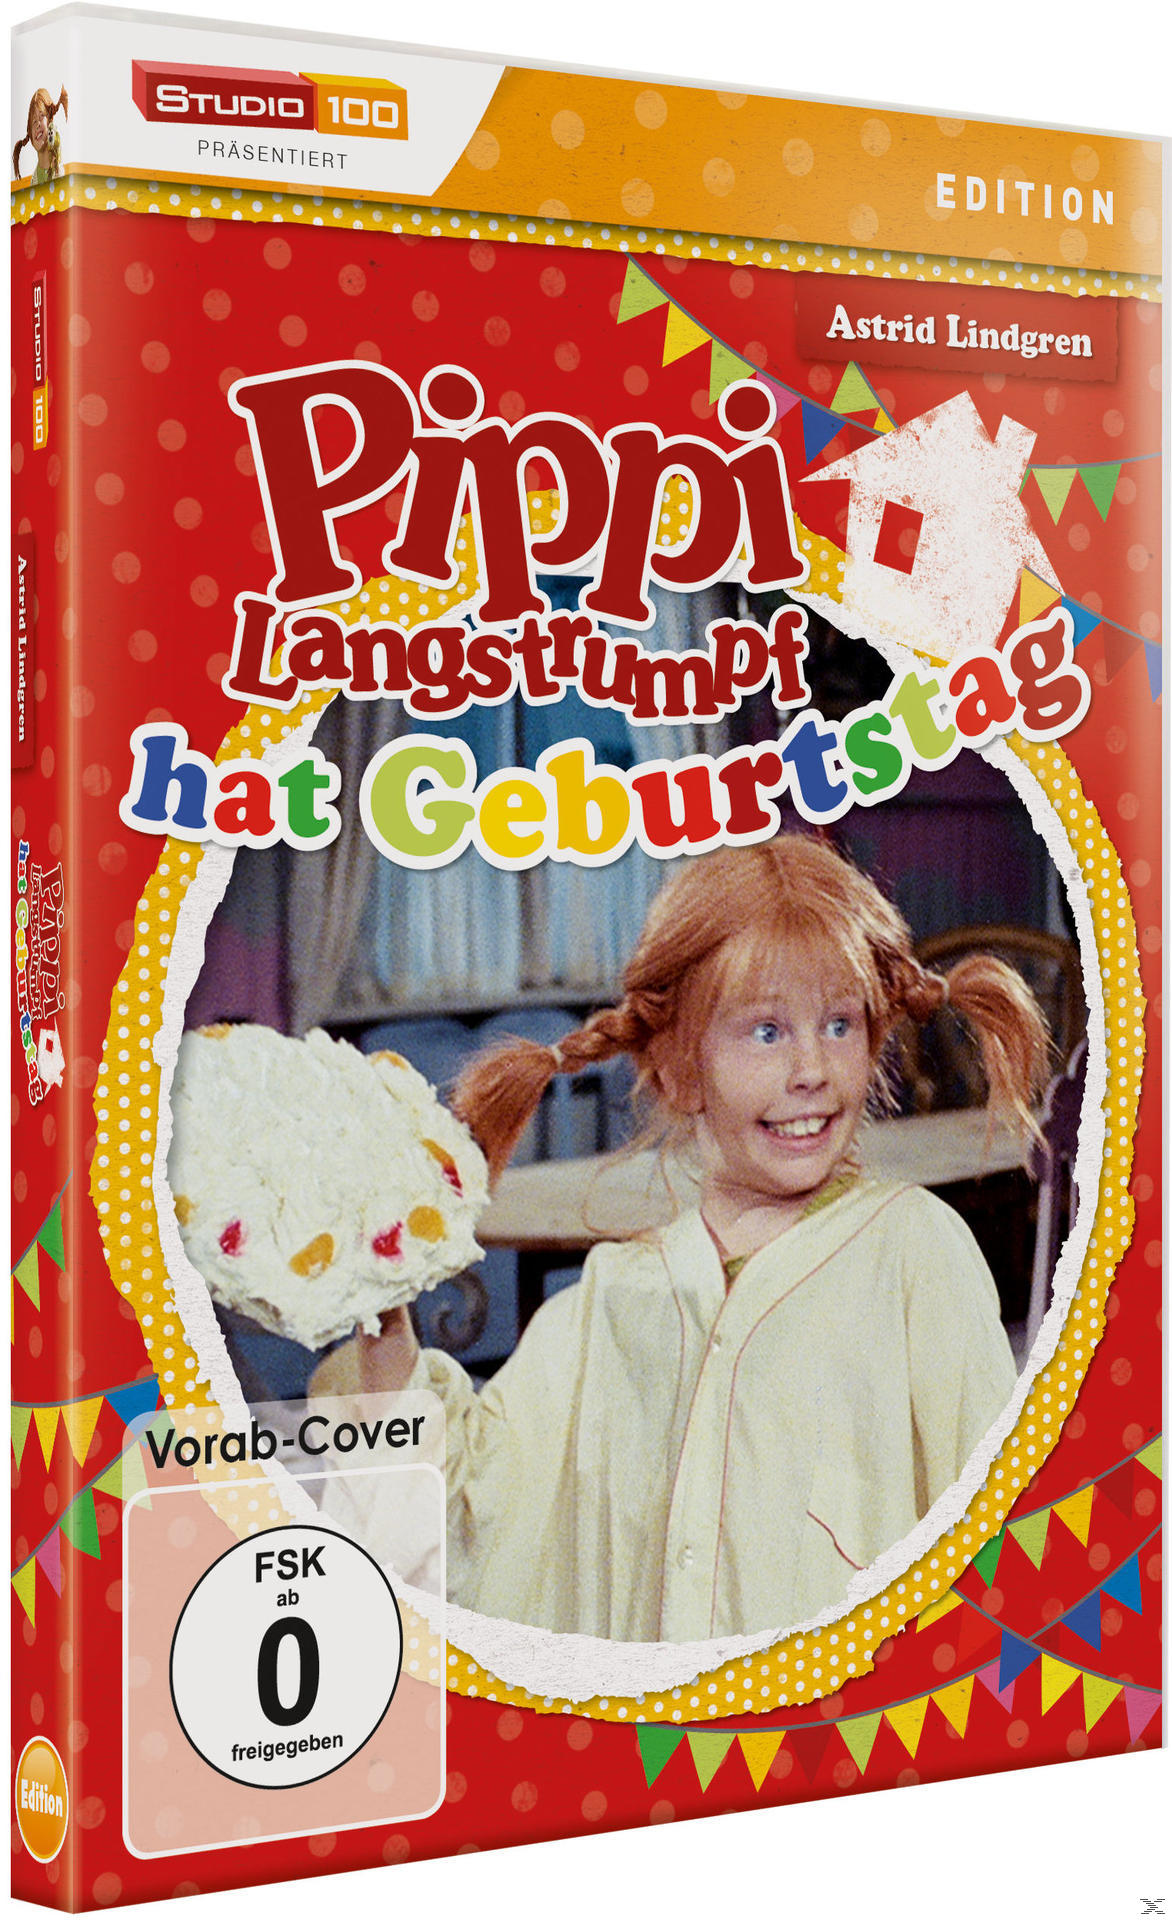 Pippi DVD Langstrumpf hat Geburtstag